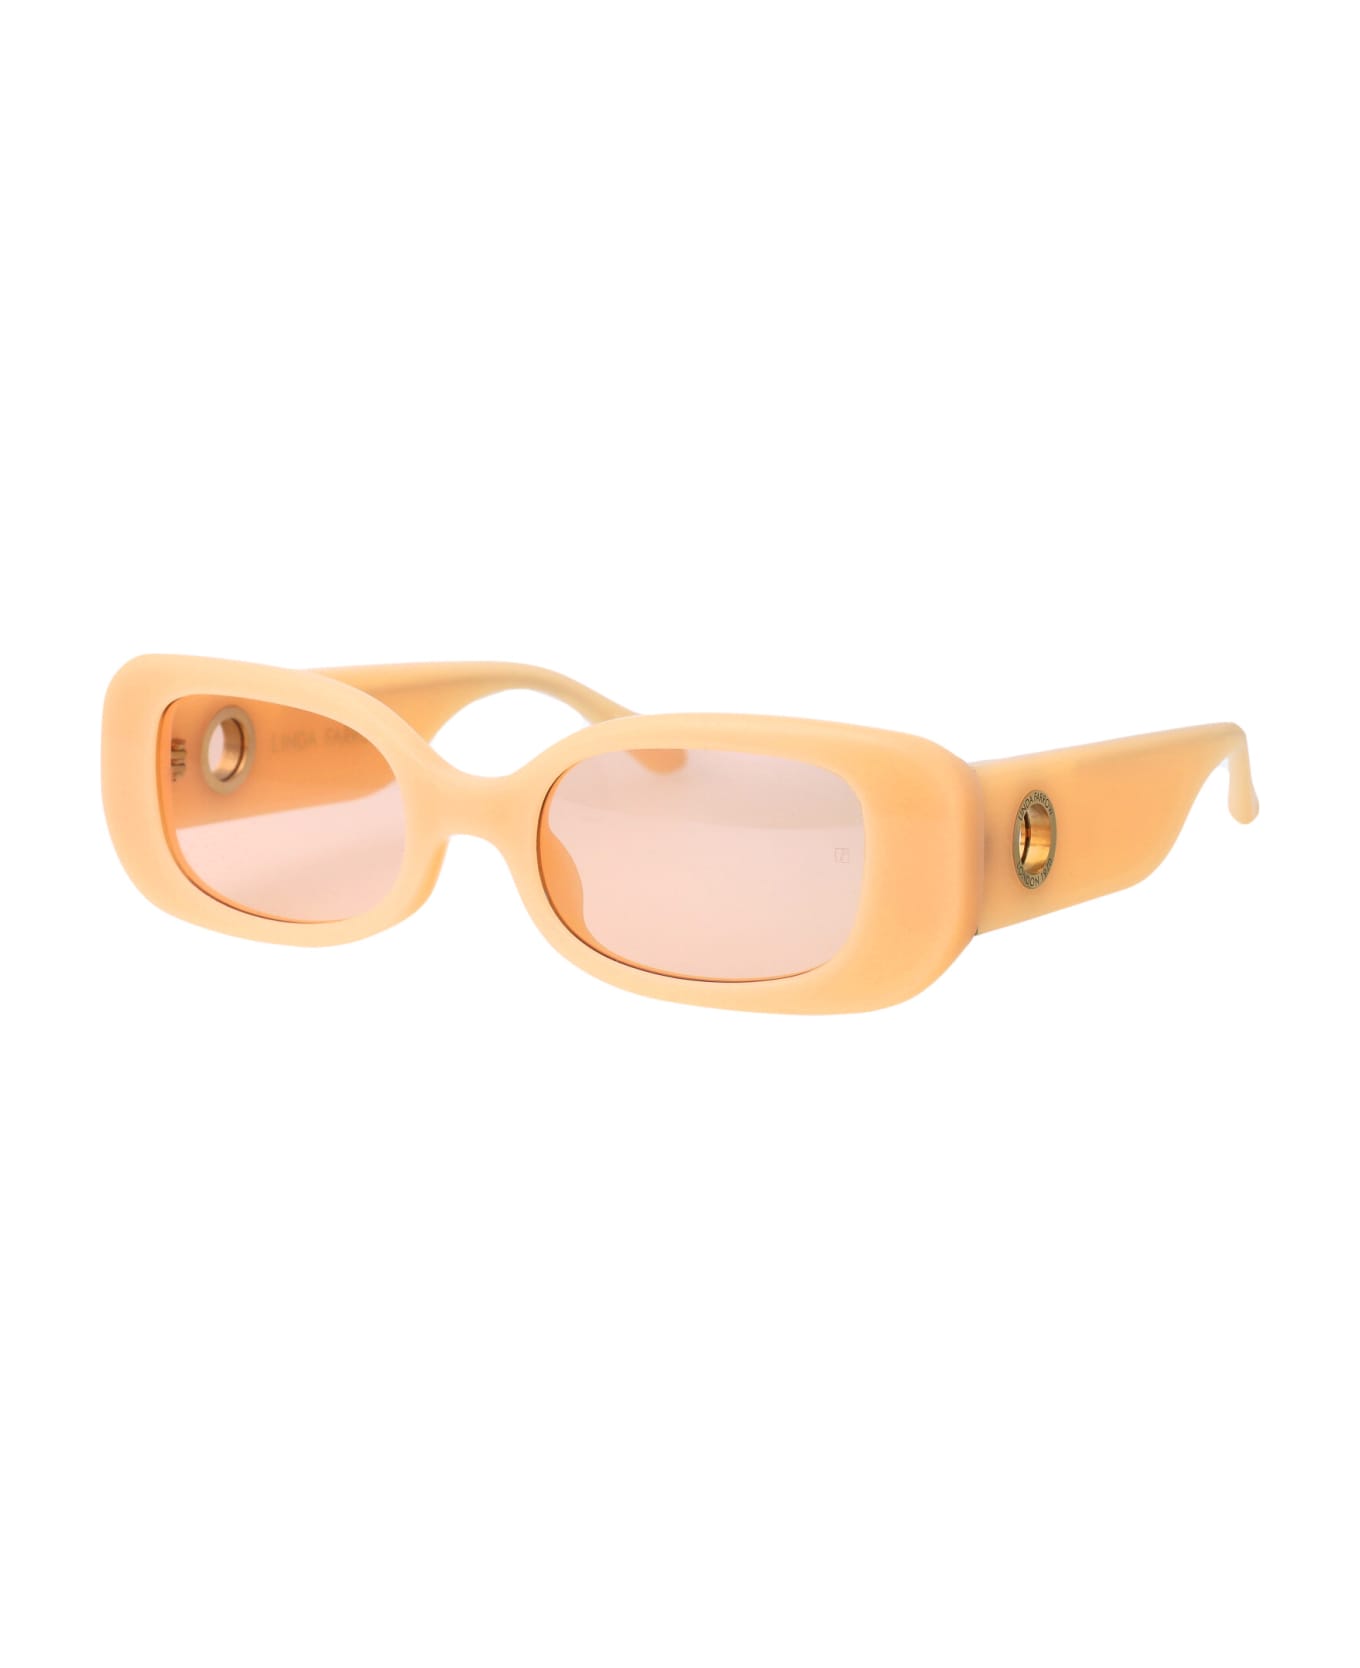 Linda Farrow Lola Sunglasses - PEACH/LIGHTGOLD/PEACH サングラス